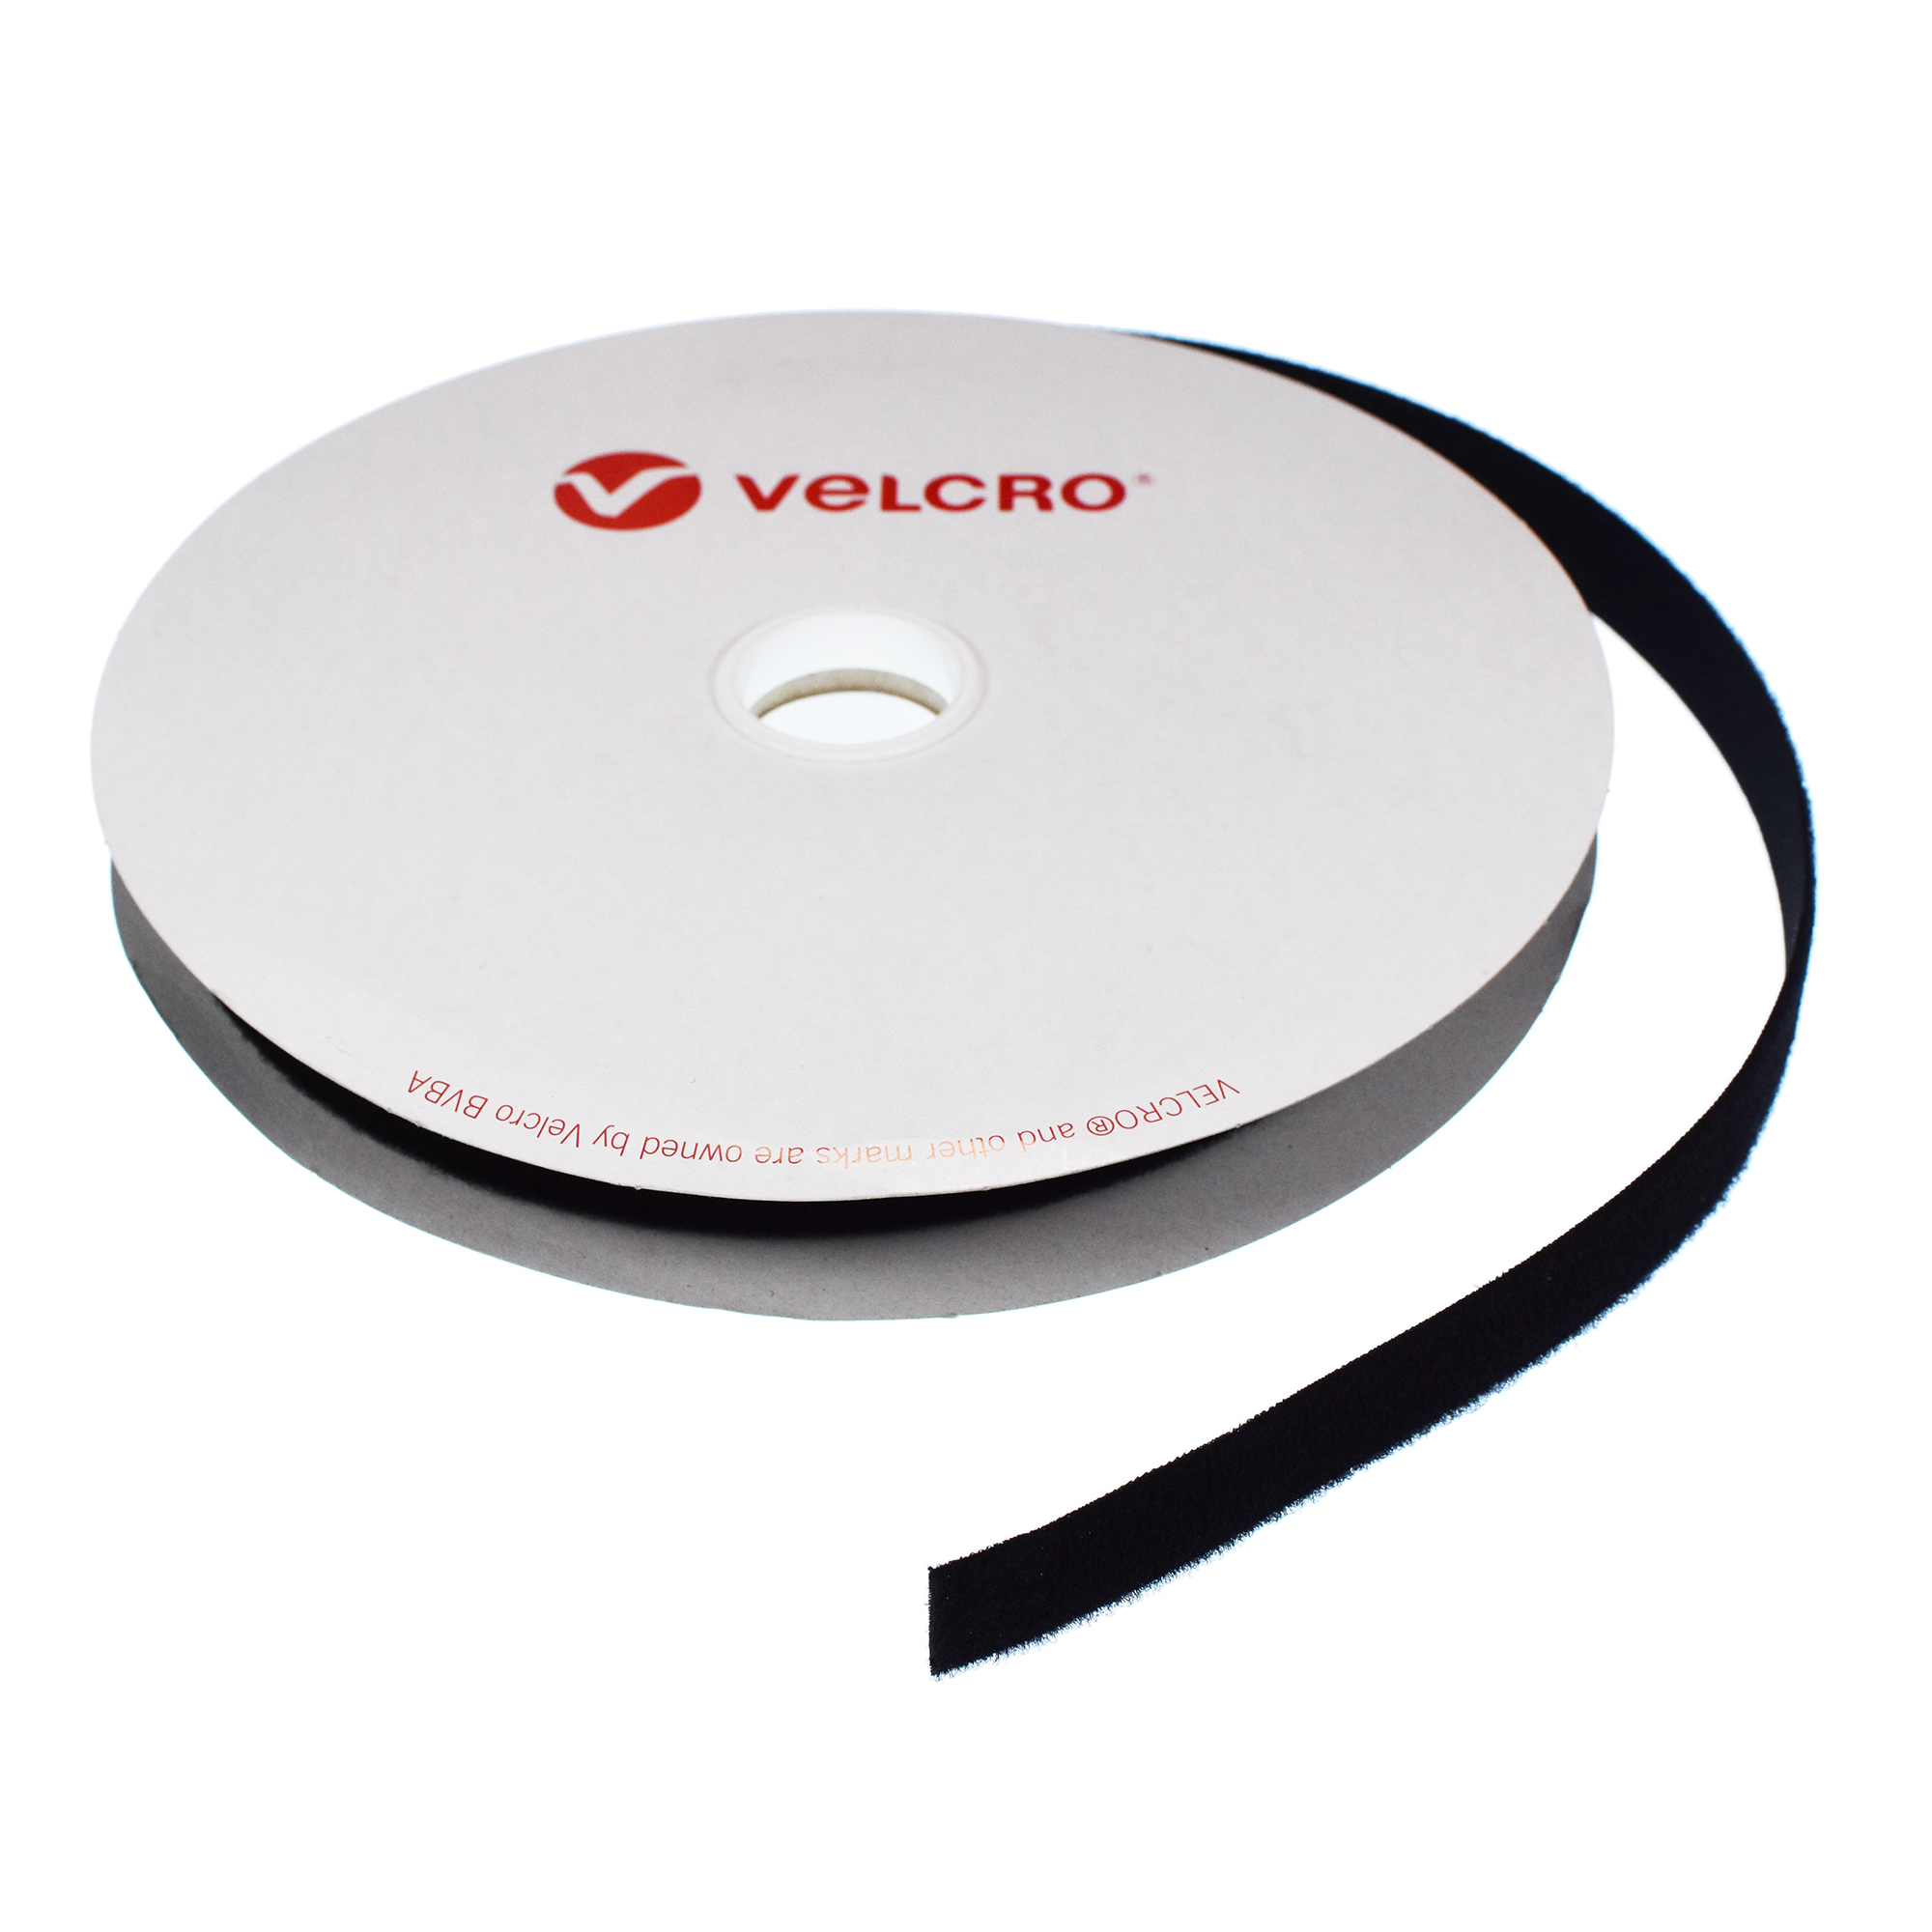 20mm VELCRO® Brand Low Profile Velour Sew-on Loop 25m Roll - Black